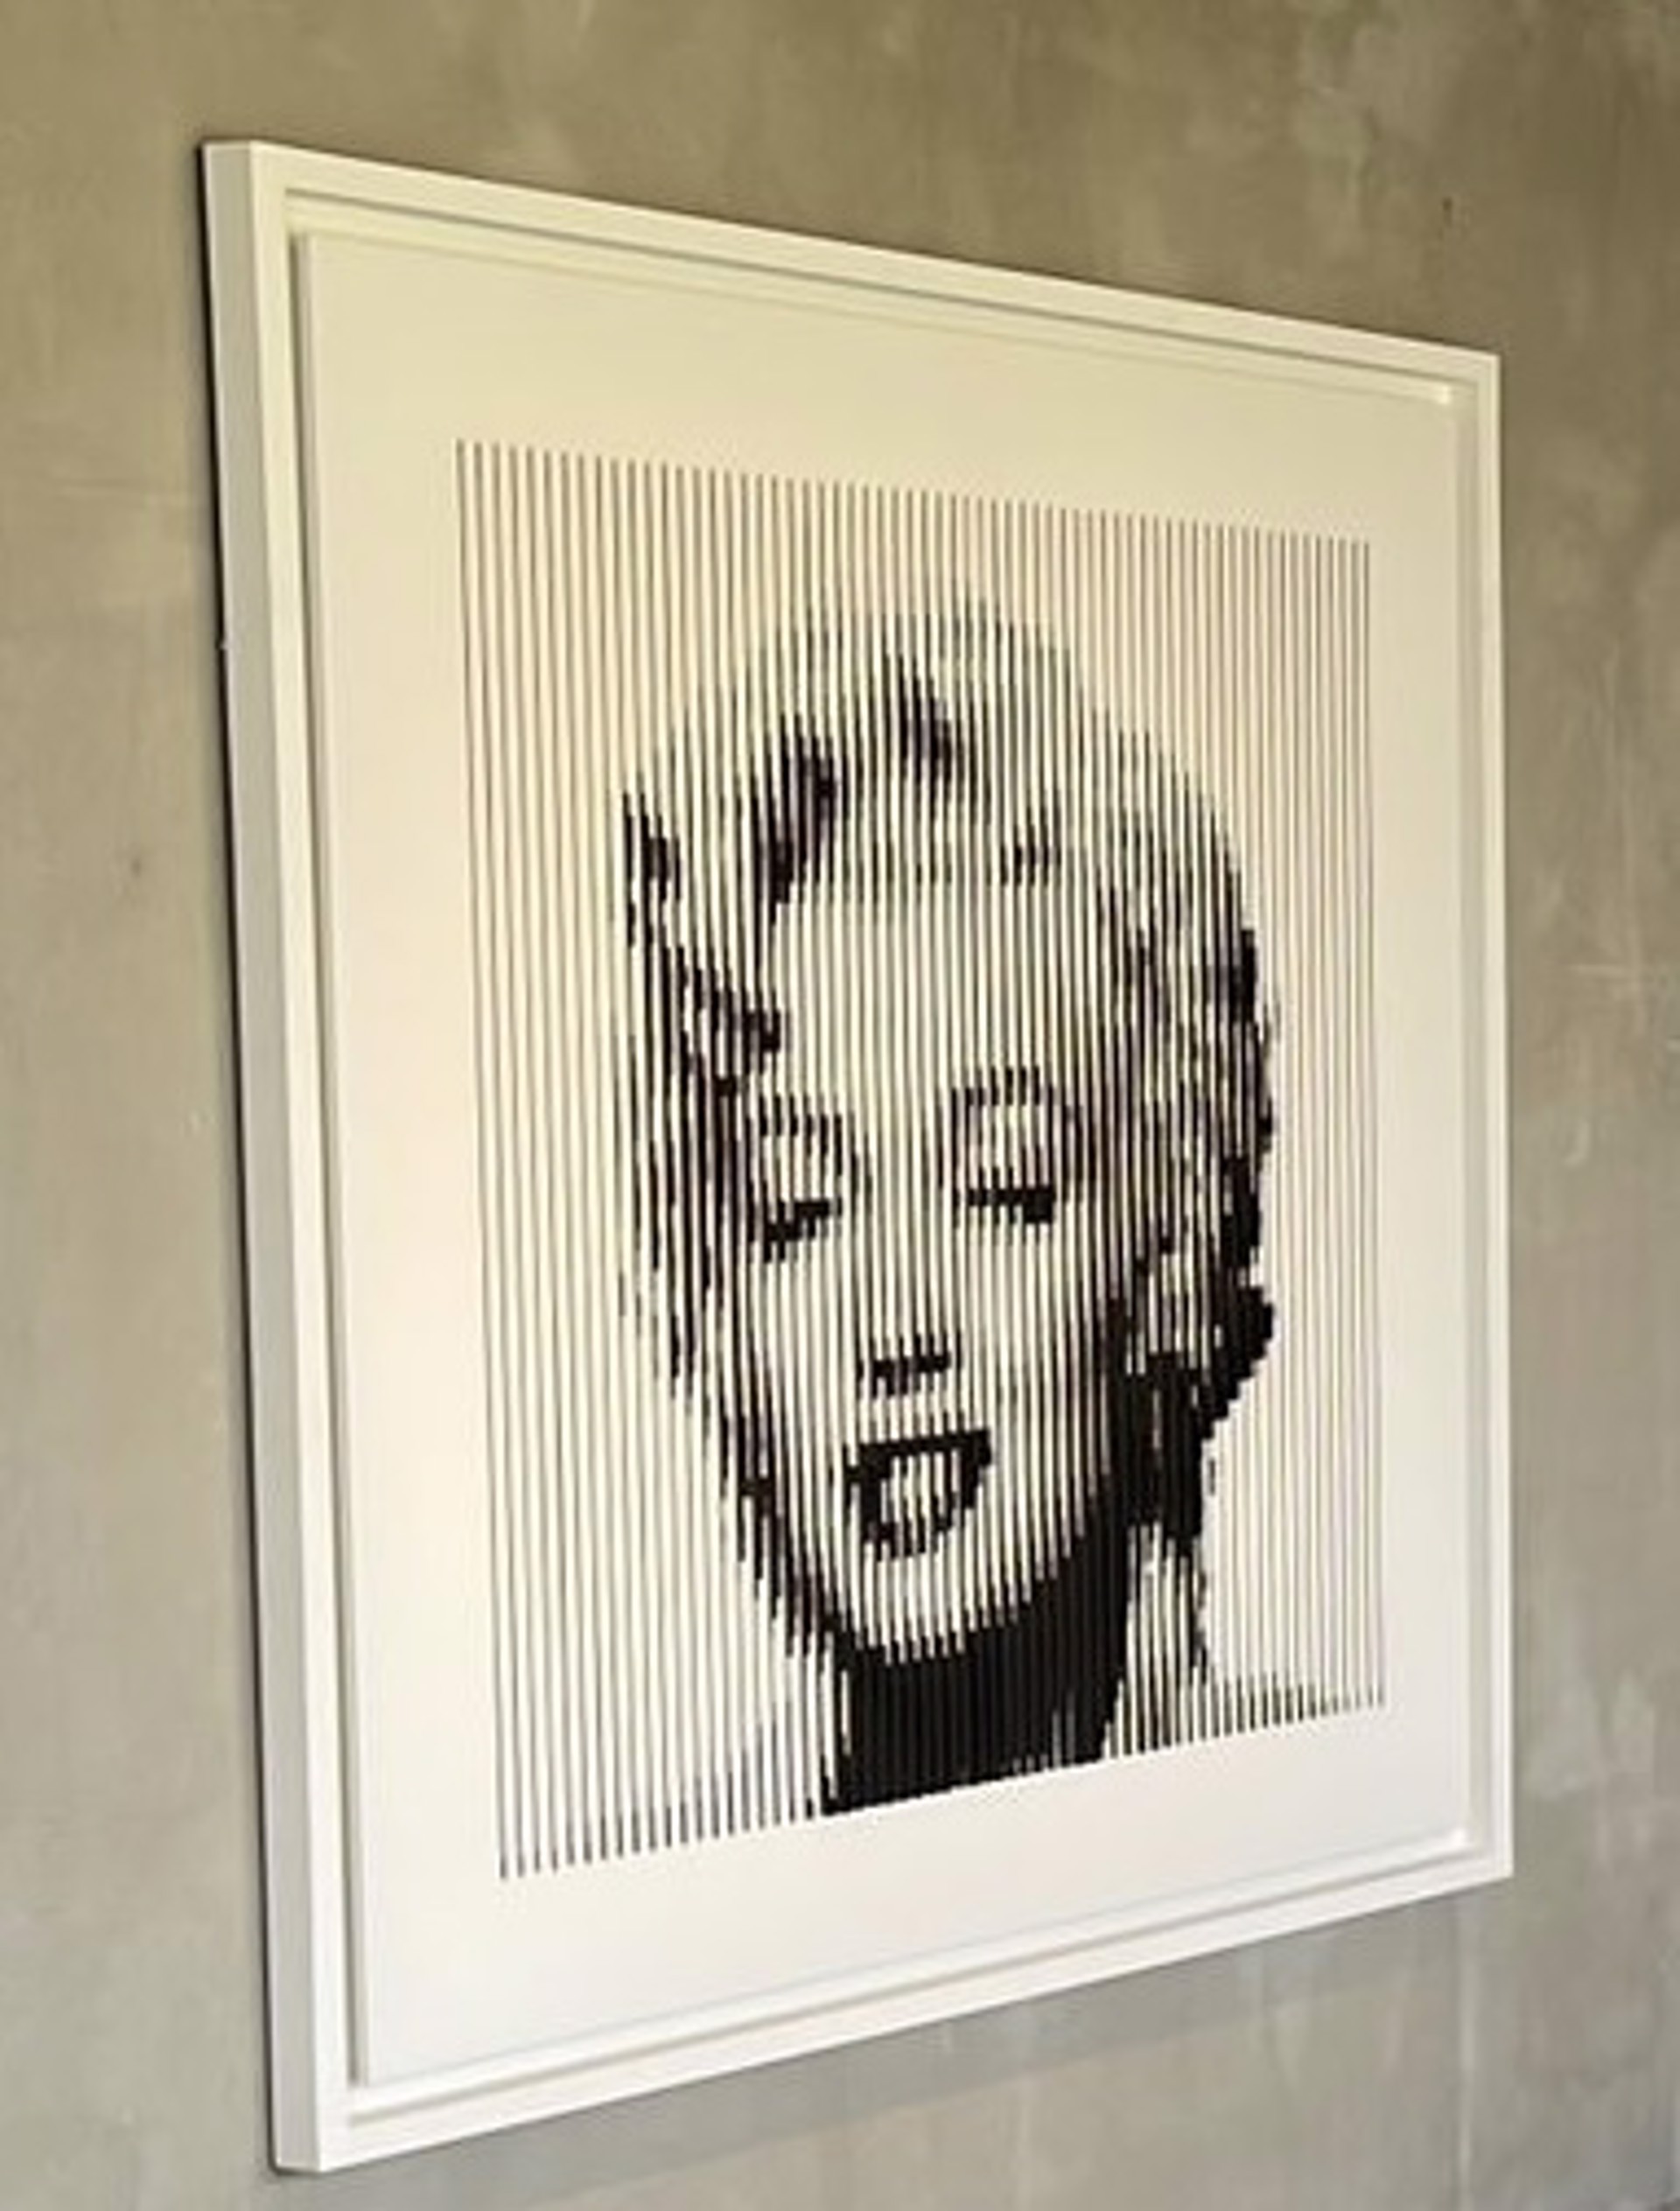 Homenaje a Marilyn Monroe by Pablo Tamayo